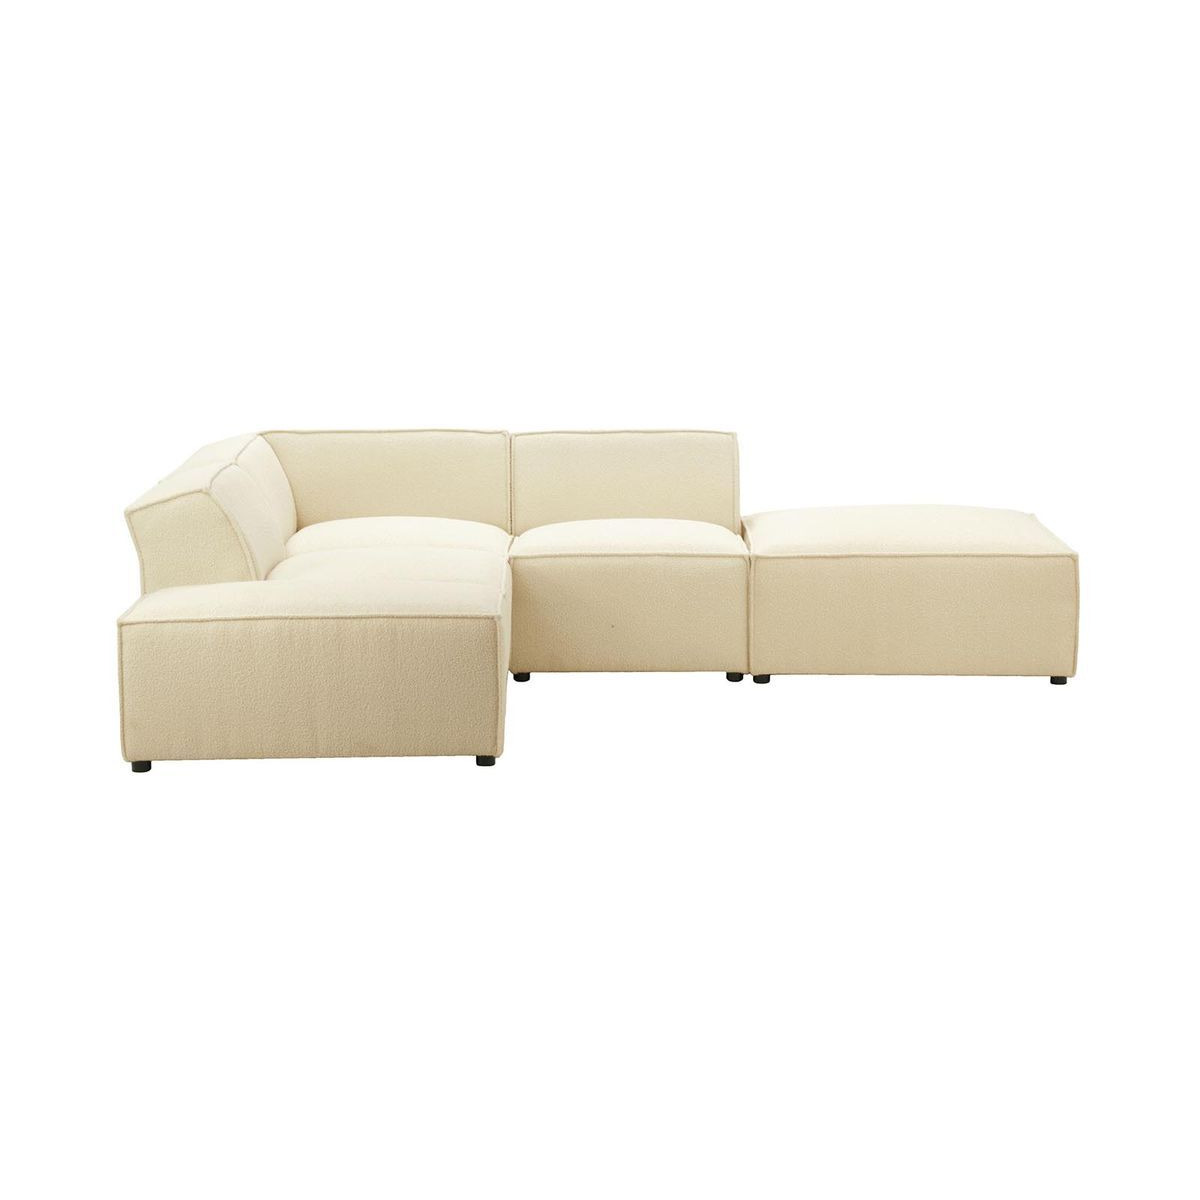 Mojo Modular Corner Sofa, boucle cream - image 1